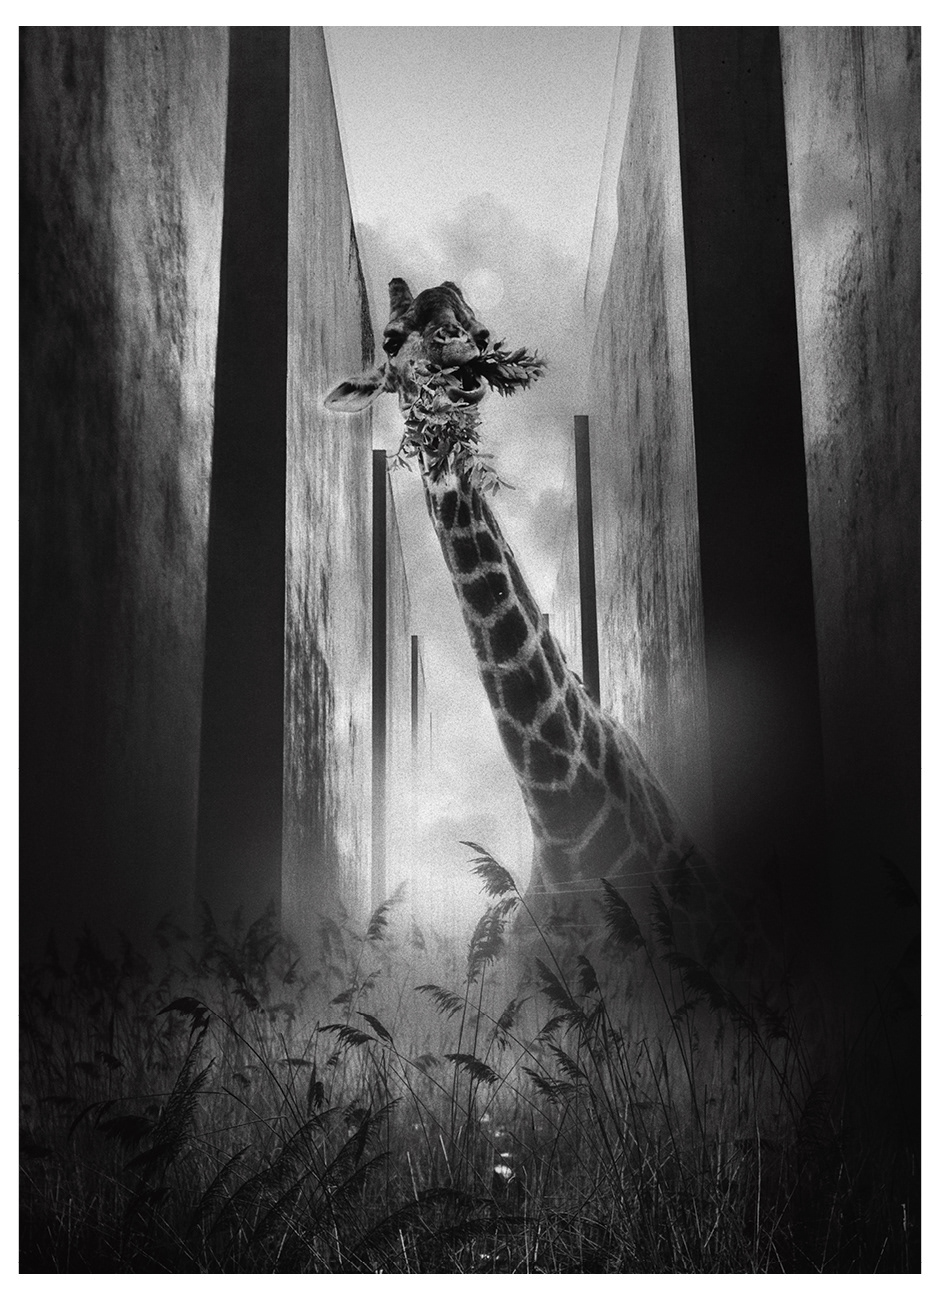 Black and white image of giraffe in Berlin